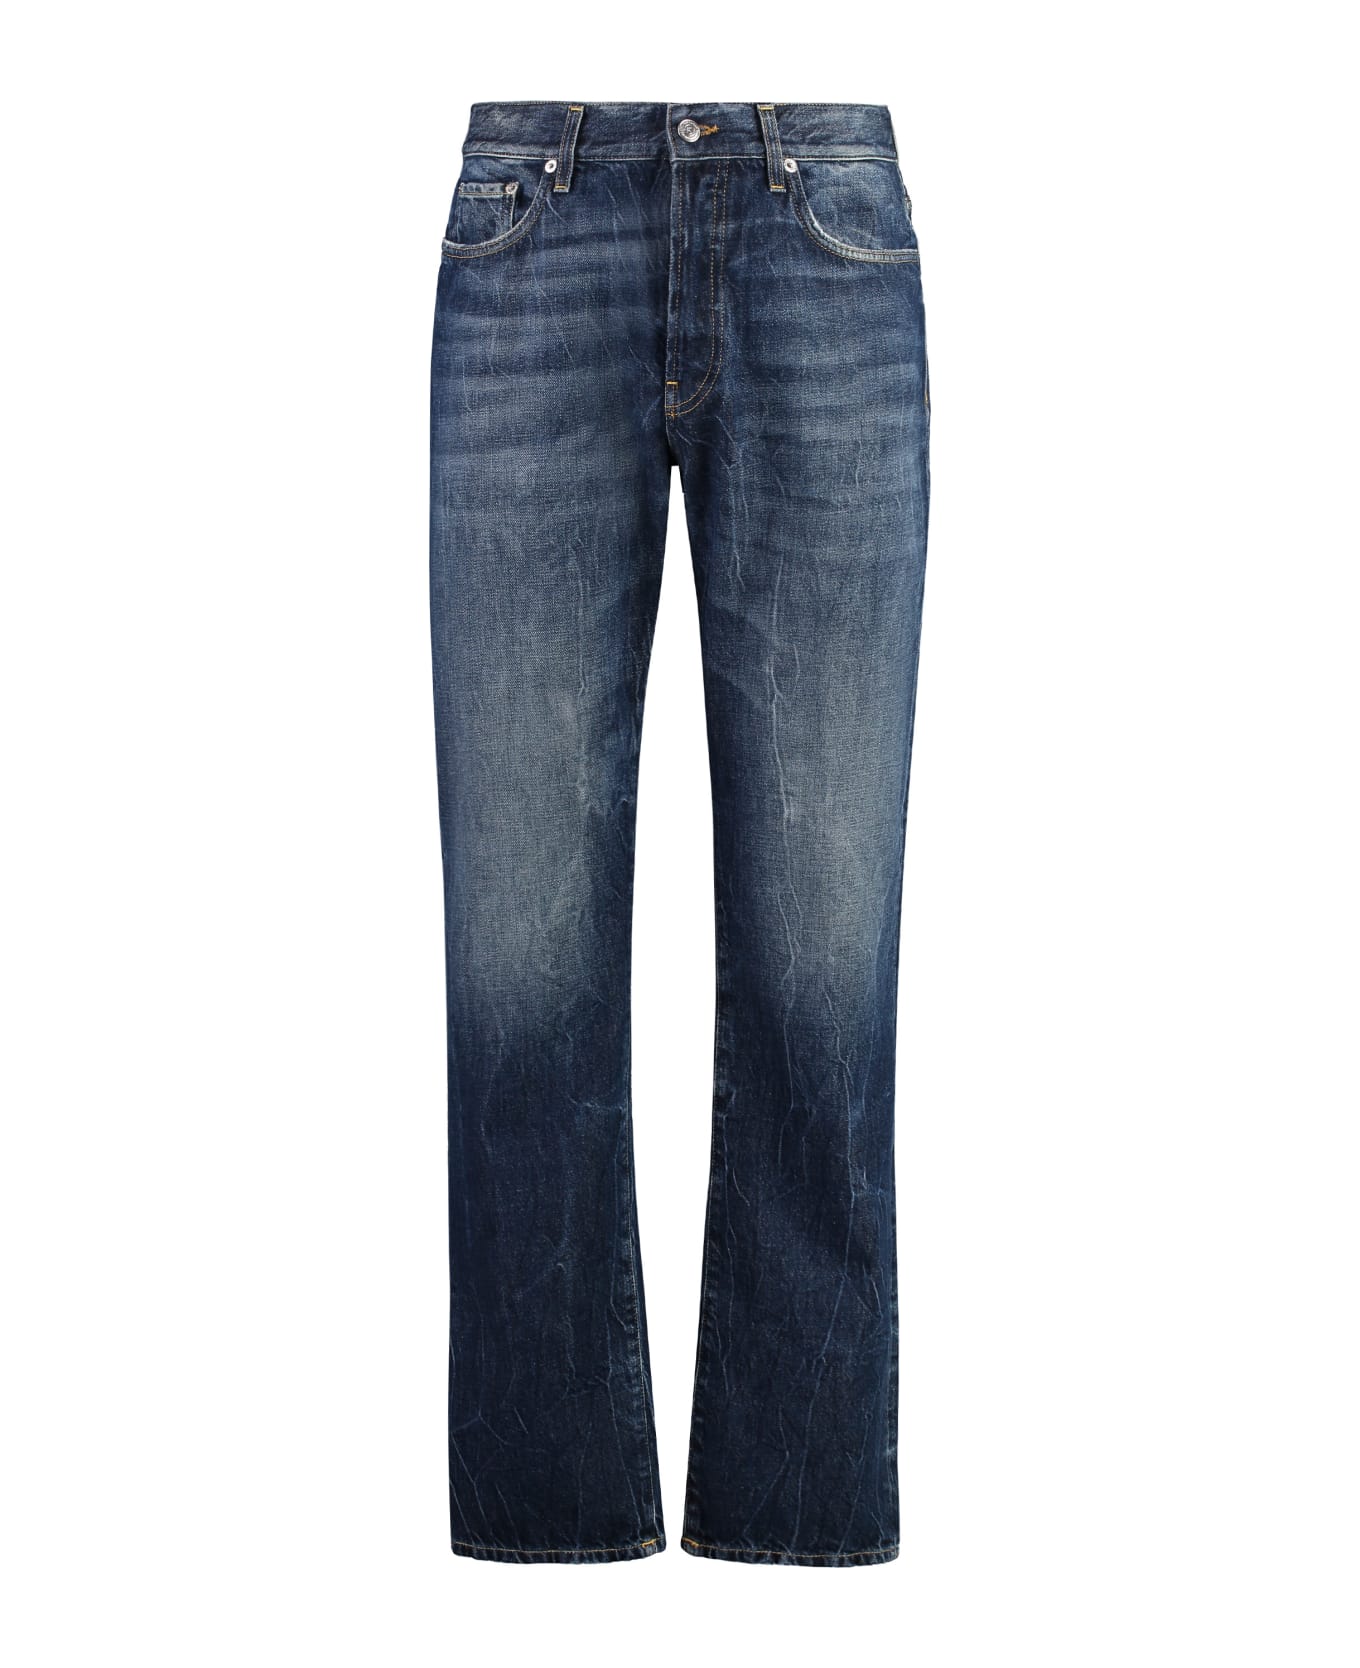 Department Five Bowl 5-pocket Straight-leg Jeans - Denim デニム